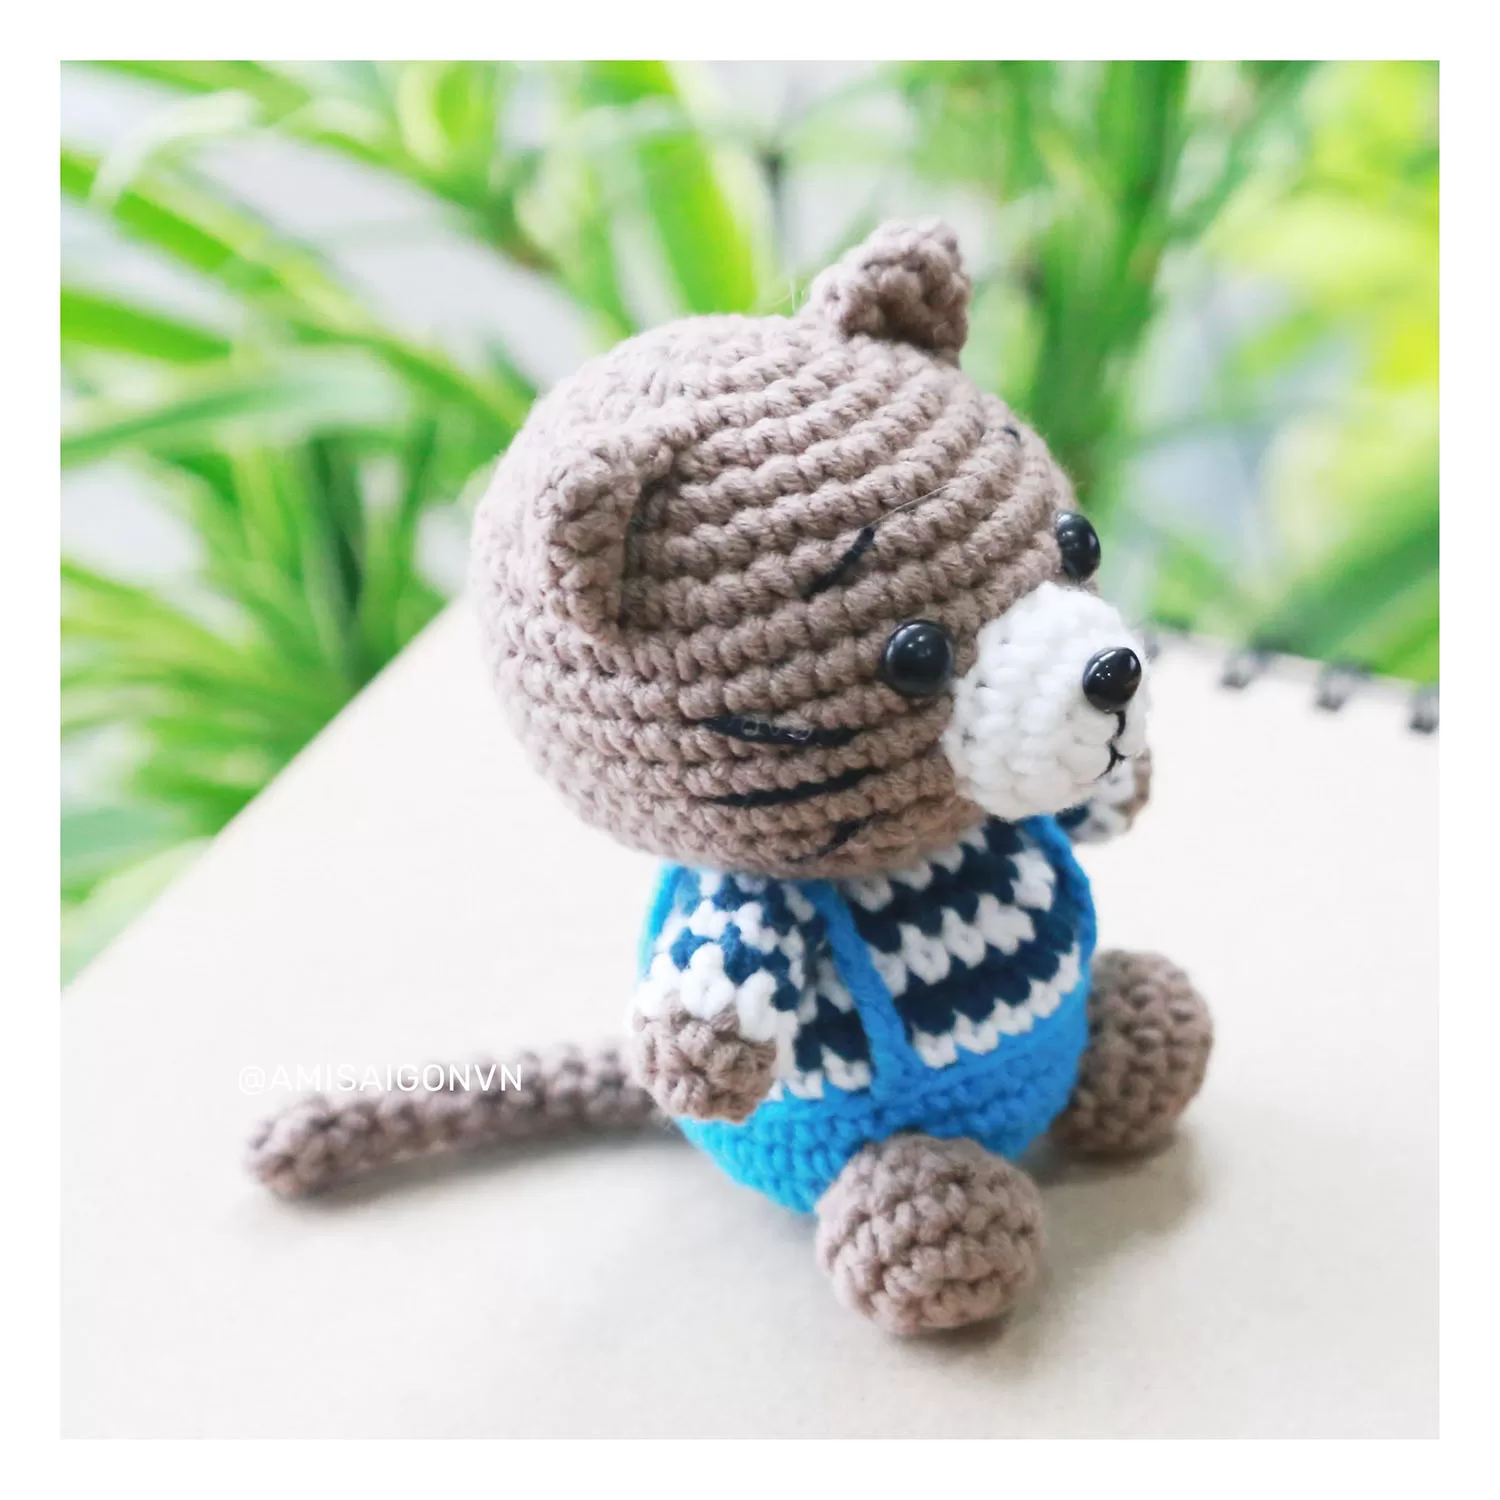 Cat Amigurumi | Crochet Pattern | Amigurumi Tutorial PDF in English | AmiSaigon